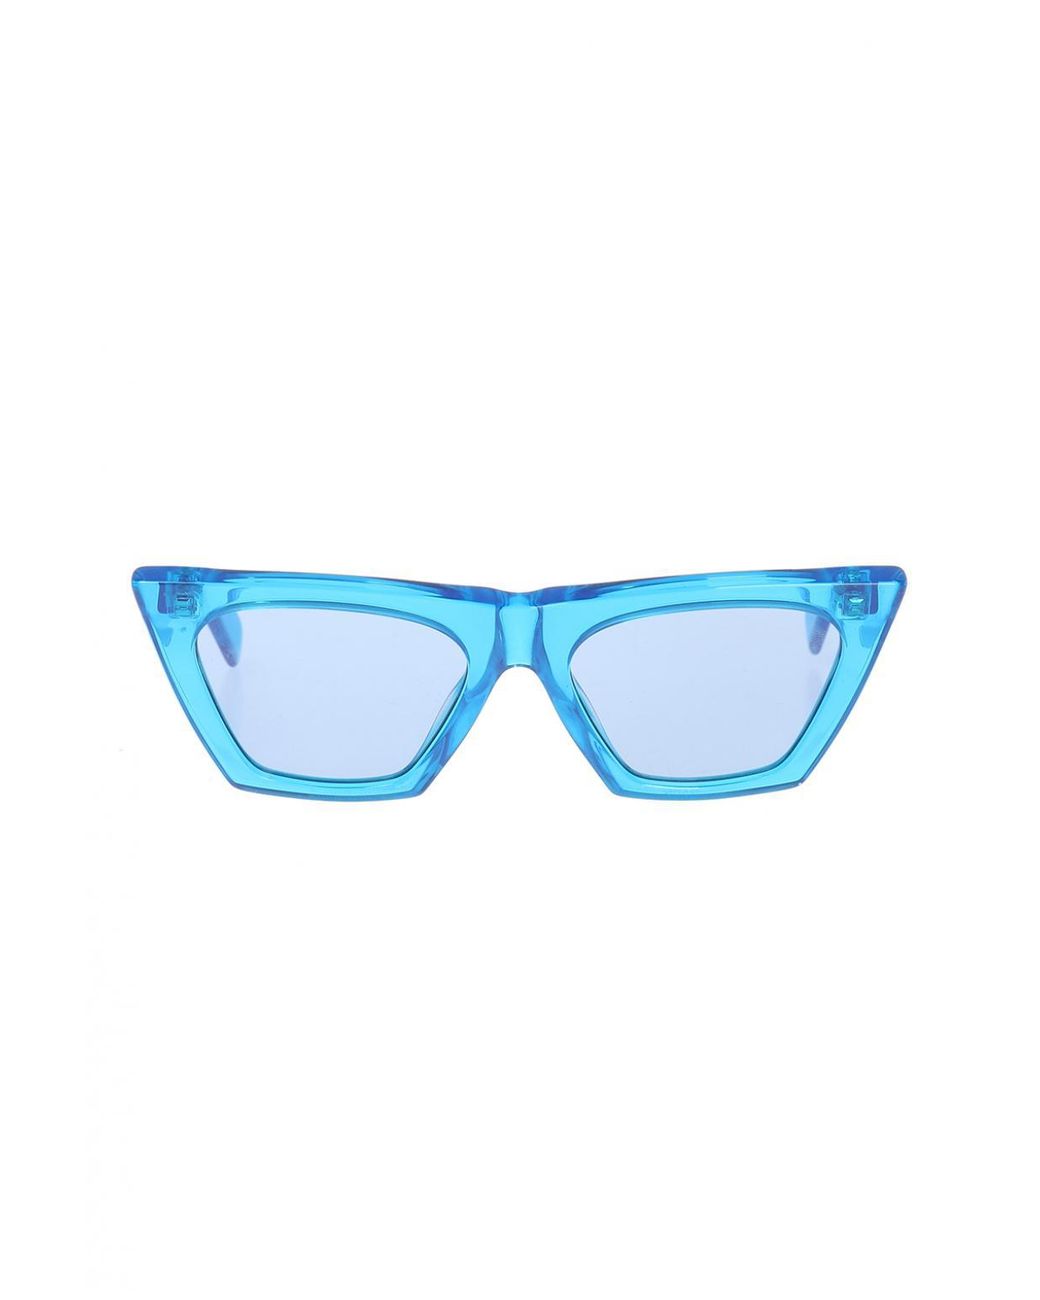 Celine 'edge' Sunglasses in Blue | Lyst